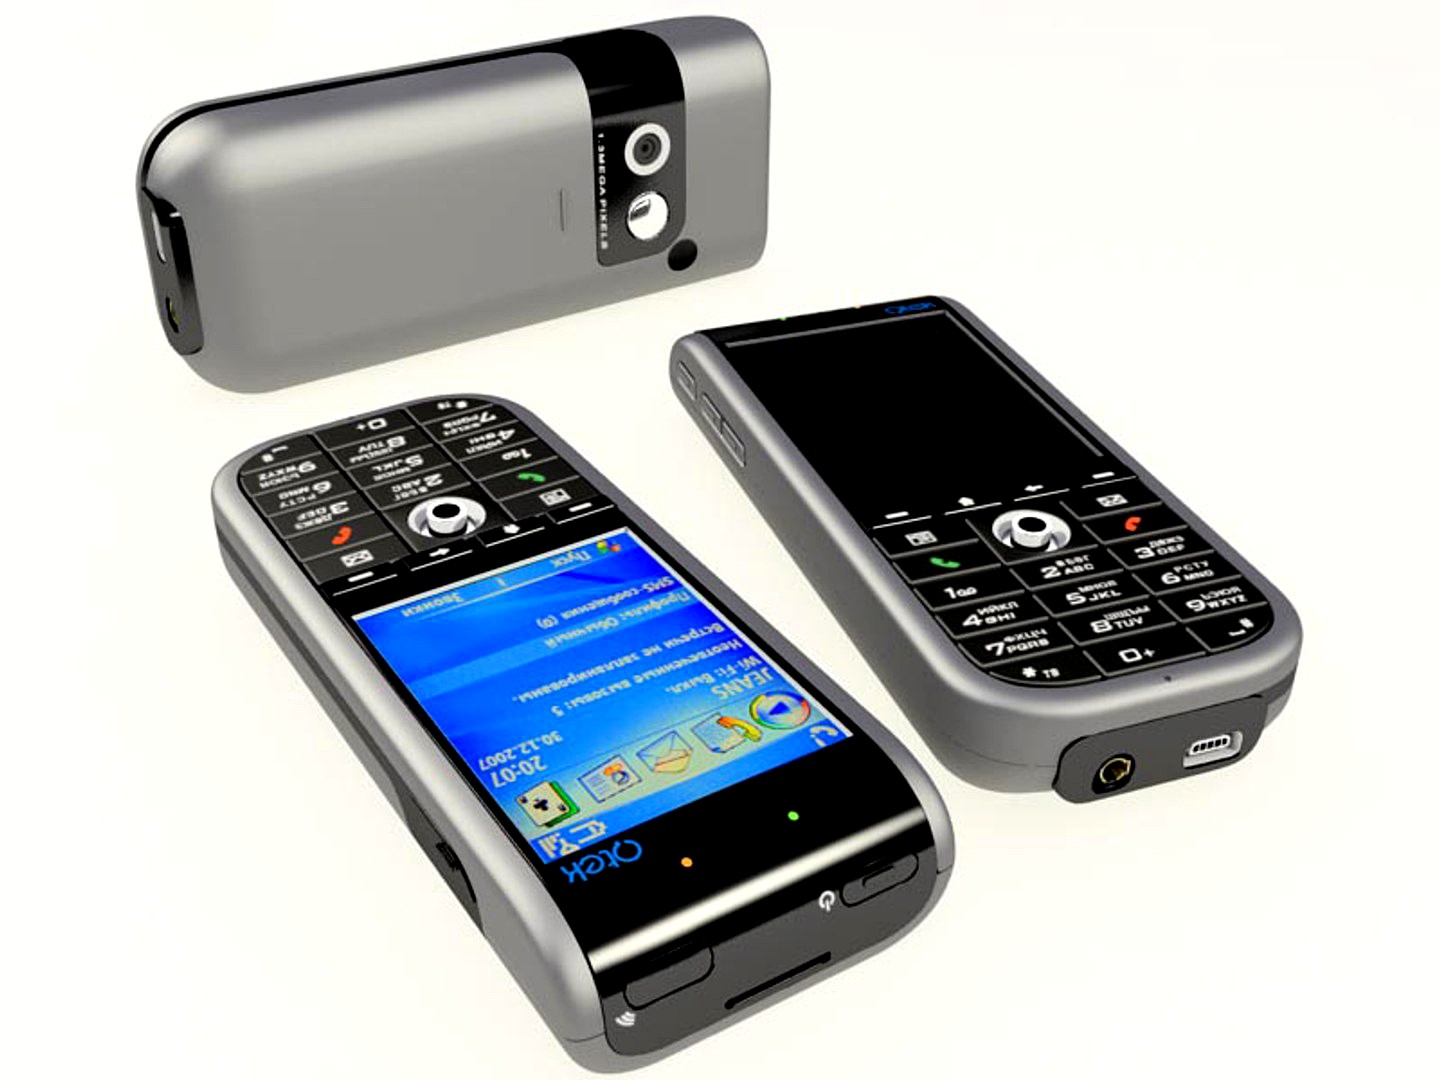 Qtek 8310 cellular smartphone